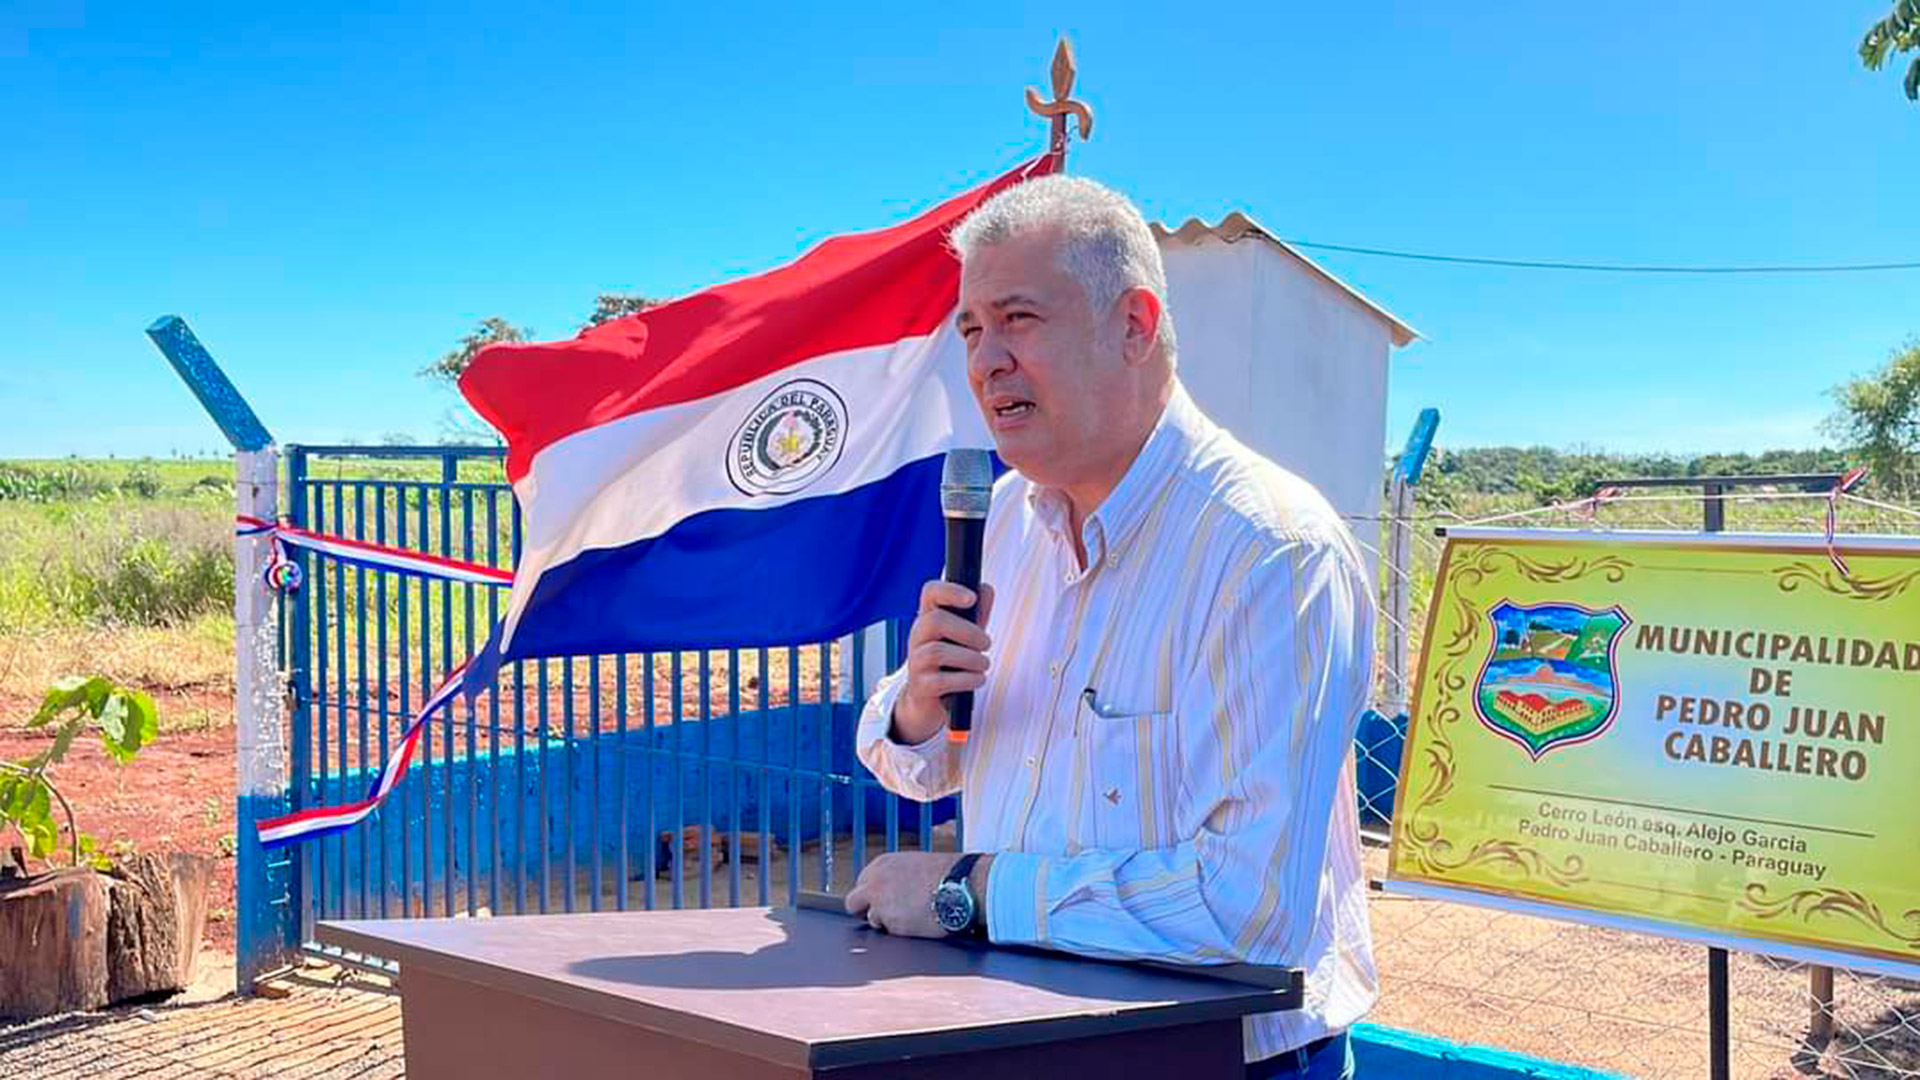 File photo of the Paraguayan mayor José Carlos Acevedo